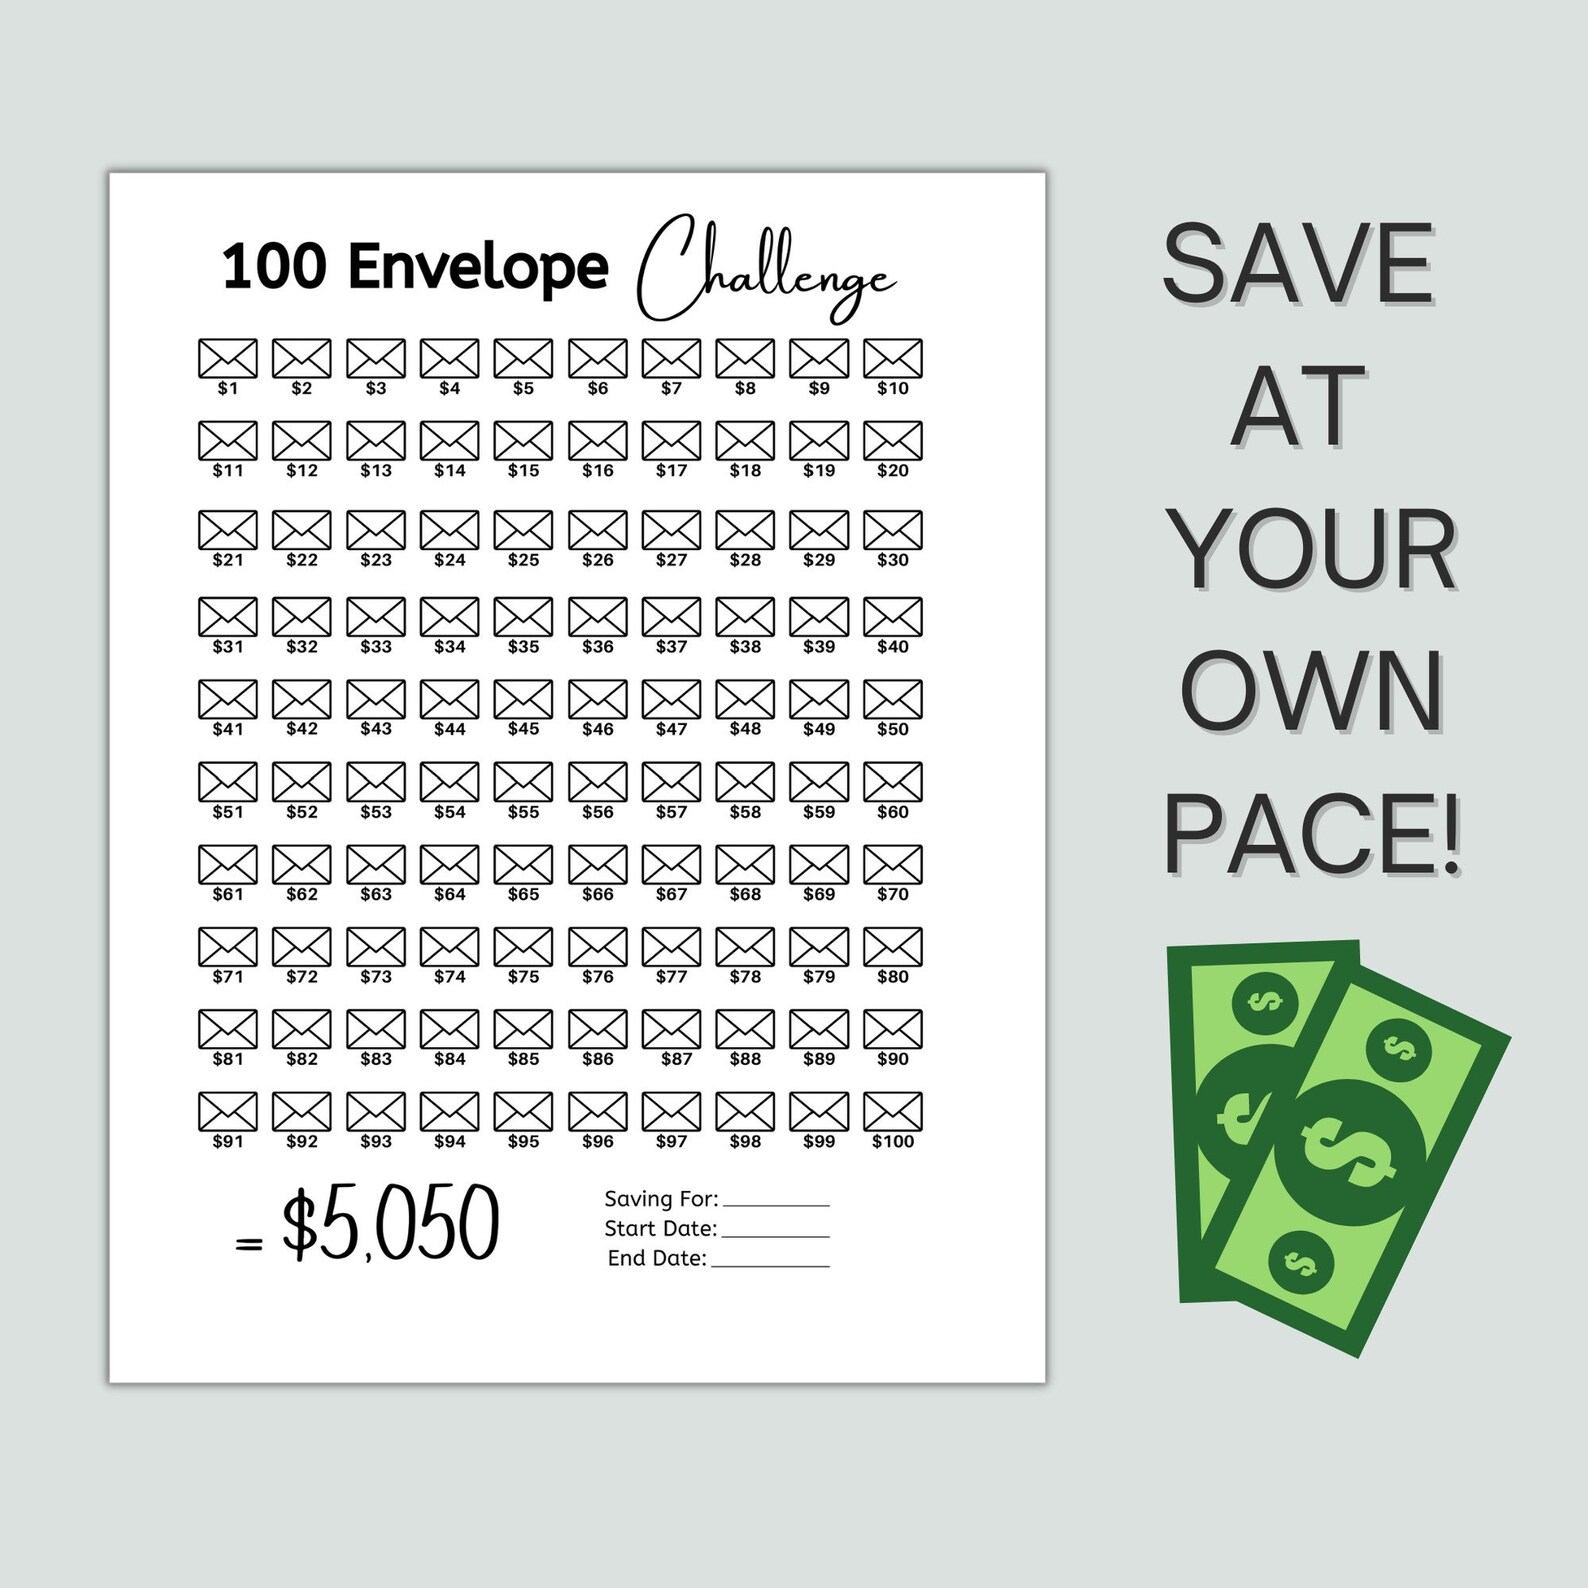 Printable 100 Envelope Challenge Tracker Hoputah